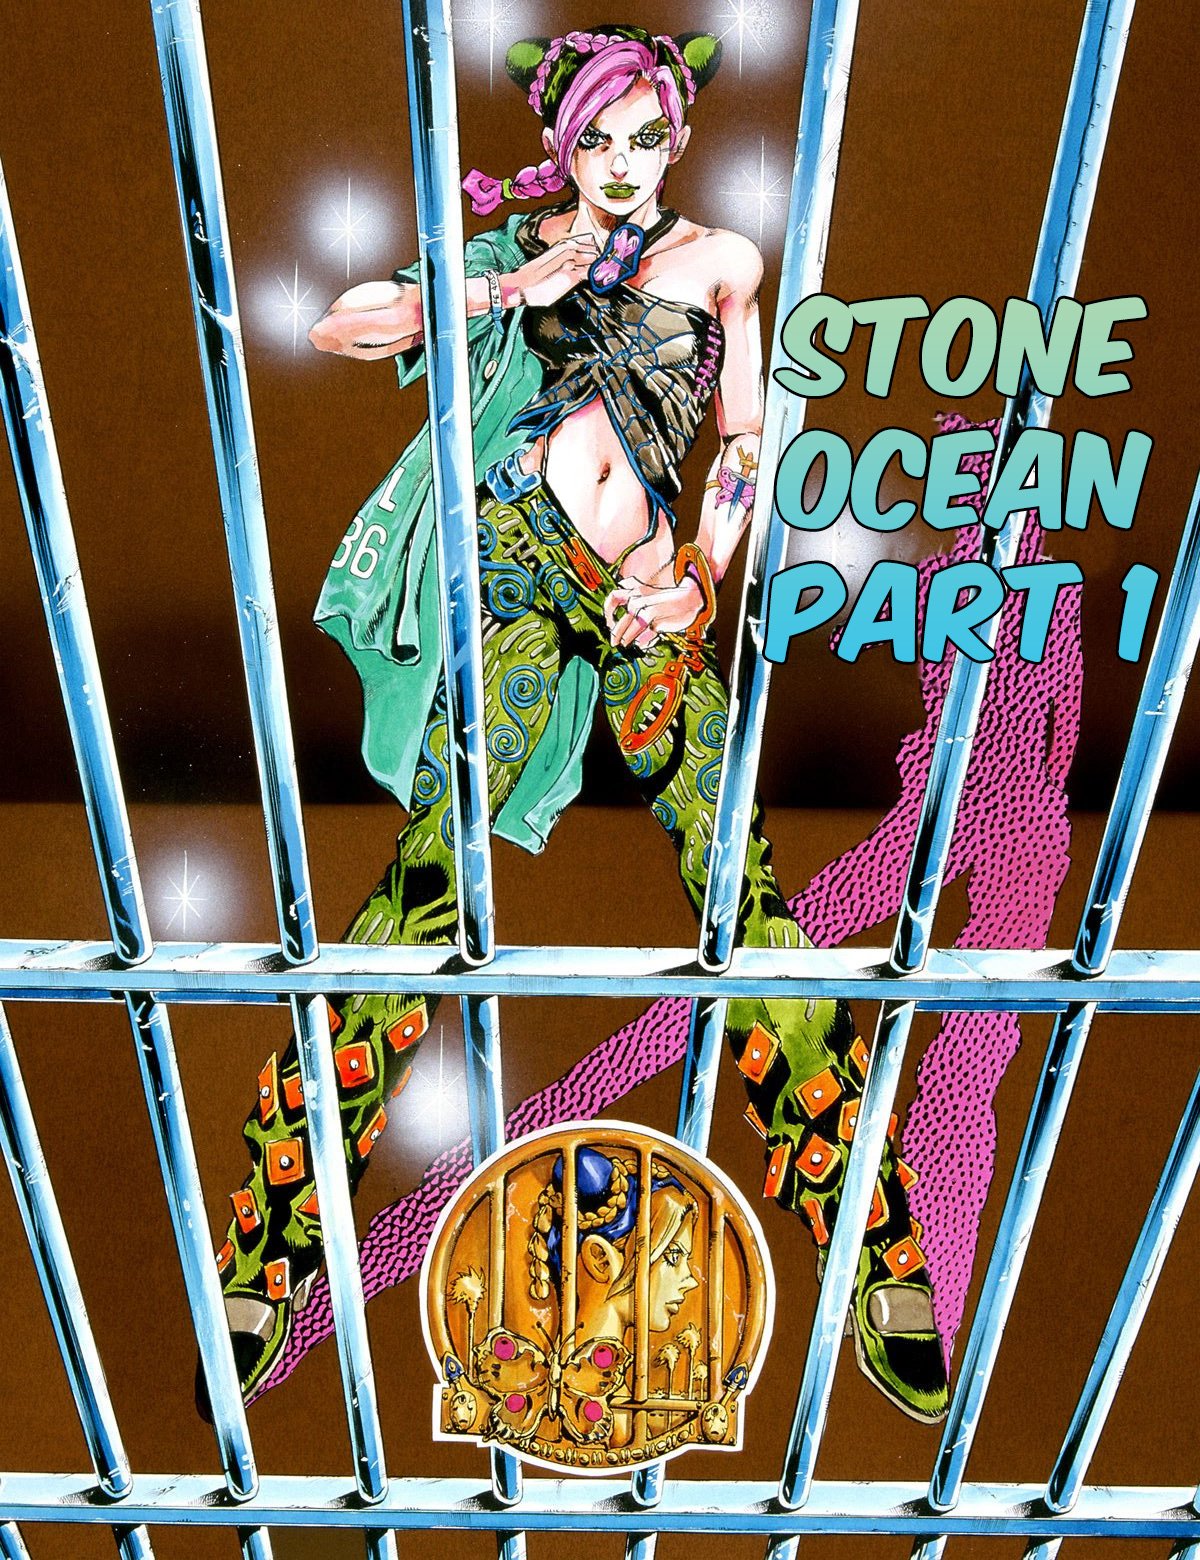 Posting JoJo Memes Daily Until Stone Ocean Anime is Released: Day 1